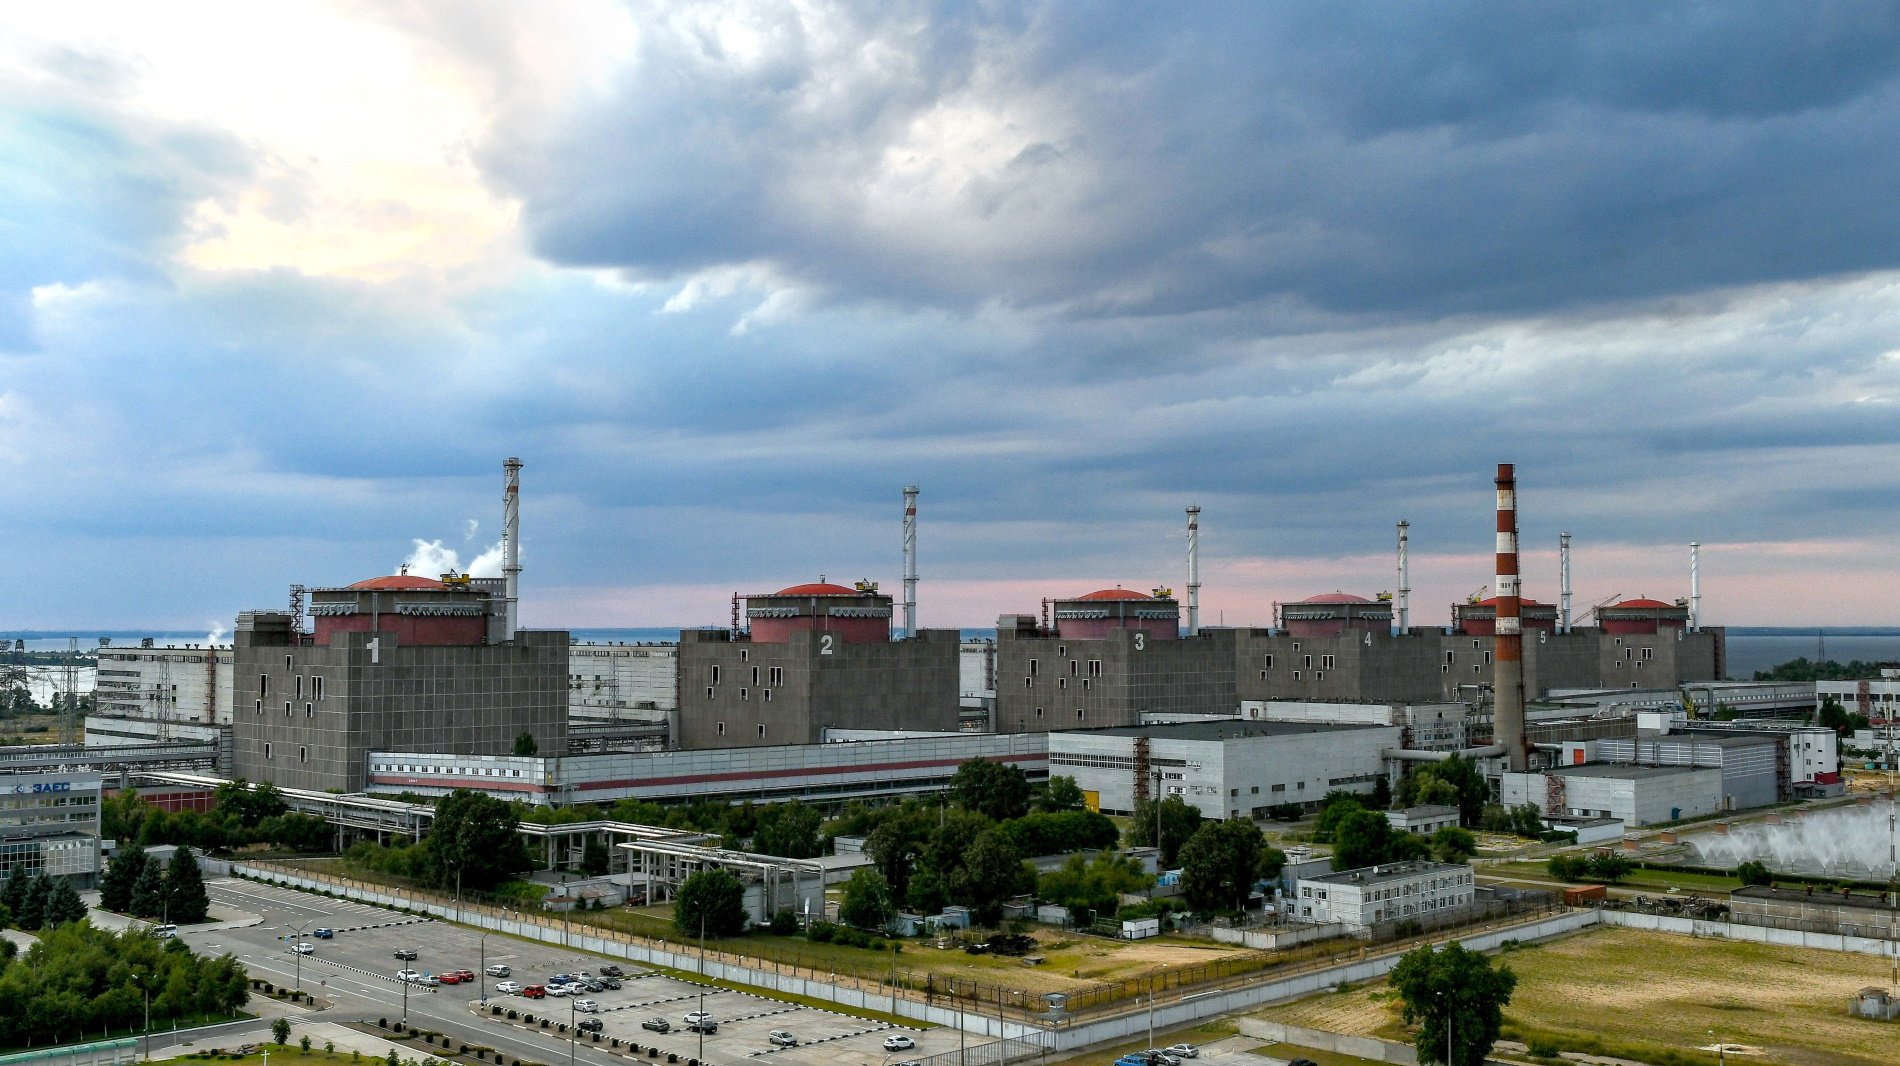 Vuelve el peligro a la central nuclear de Zaporiyia: Rusia se ve forzada a evacuar territorios próximos